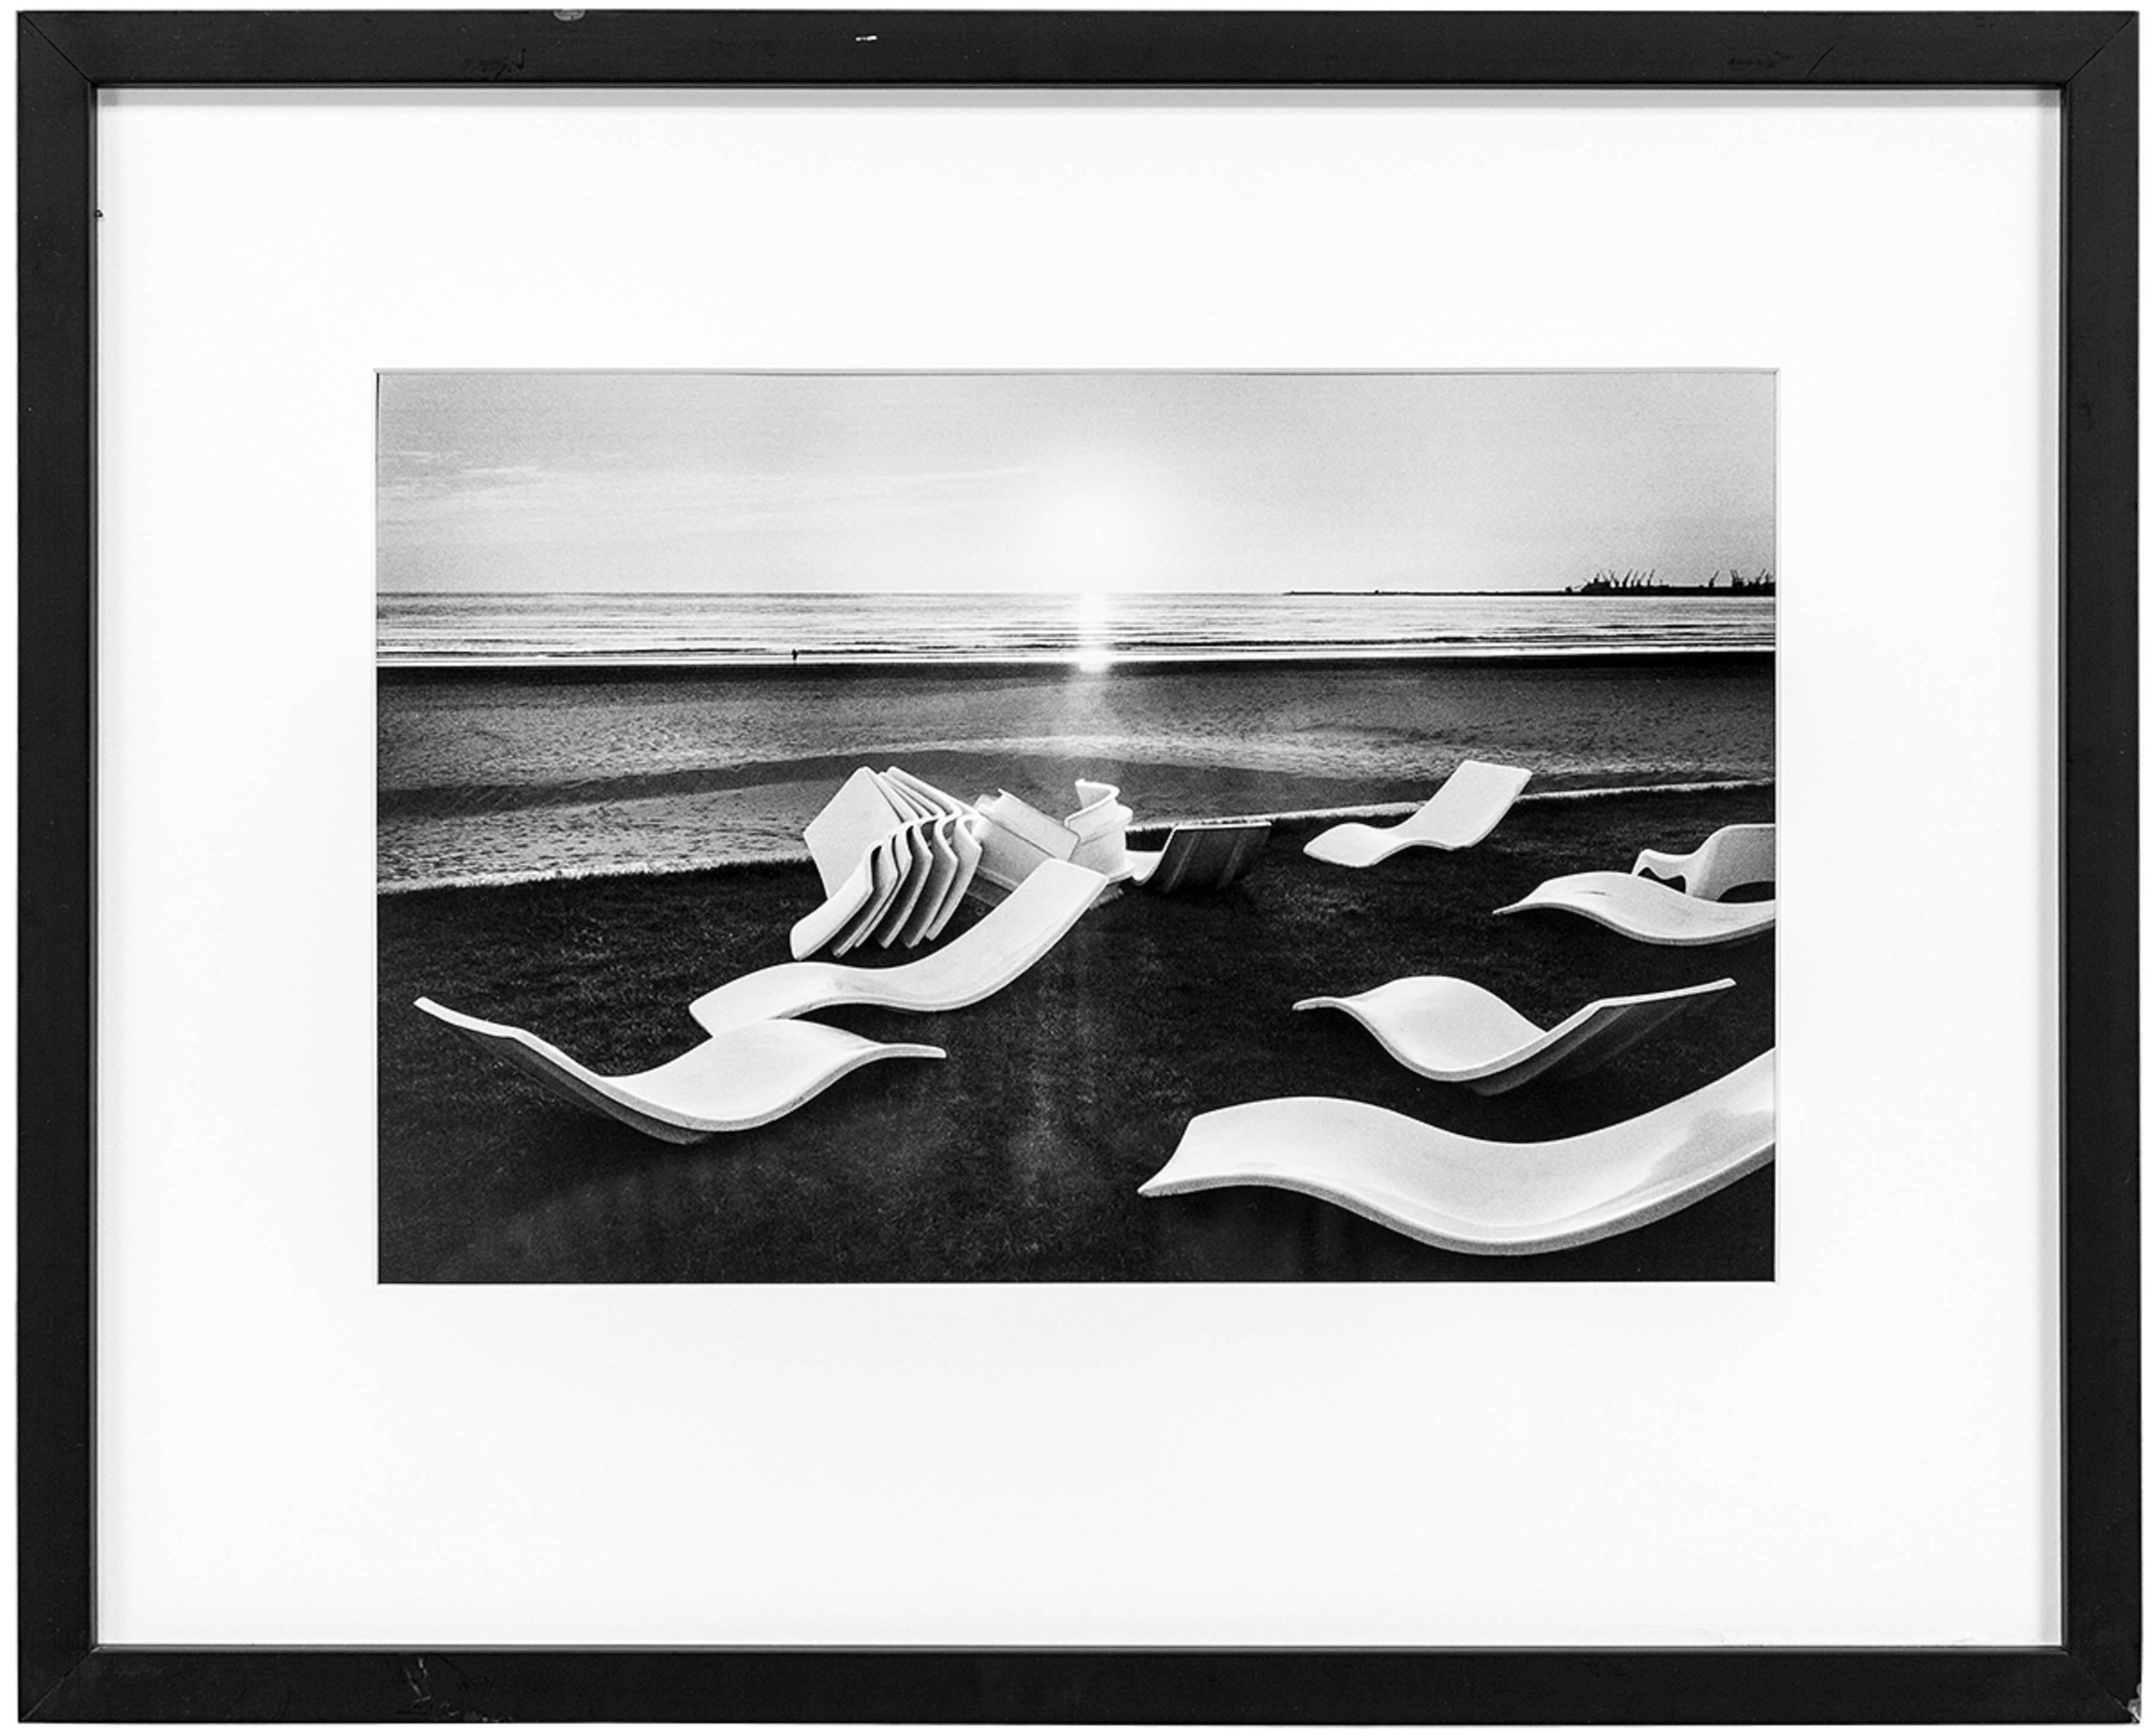 Black and White Photograph Martine Franck - Beach Run by Club Med, Agadir, Maroc, Tirage  la glatine argentique vintage